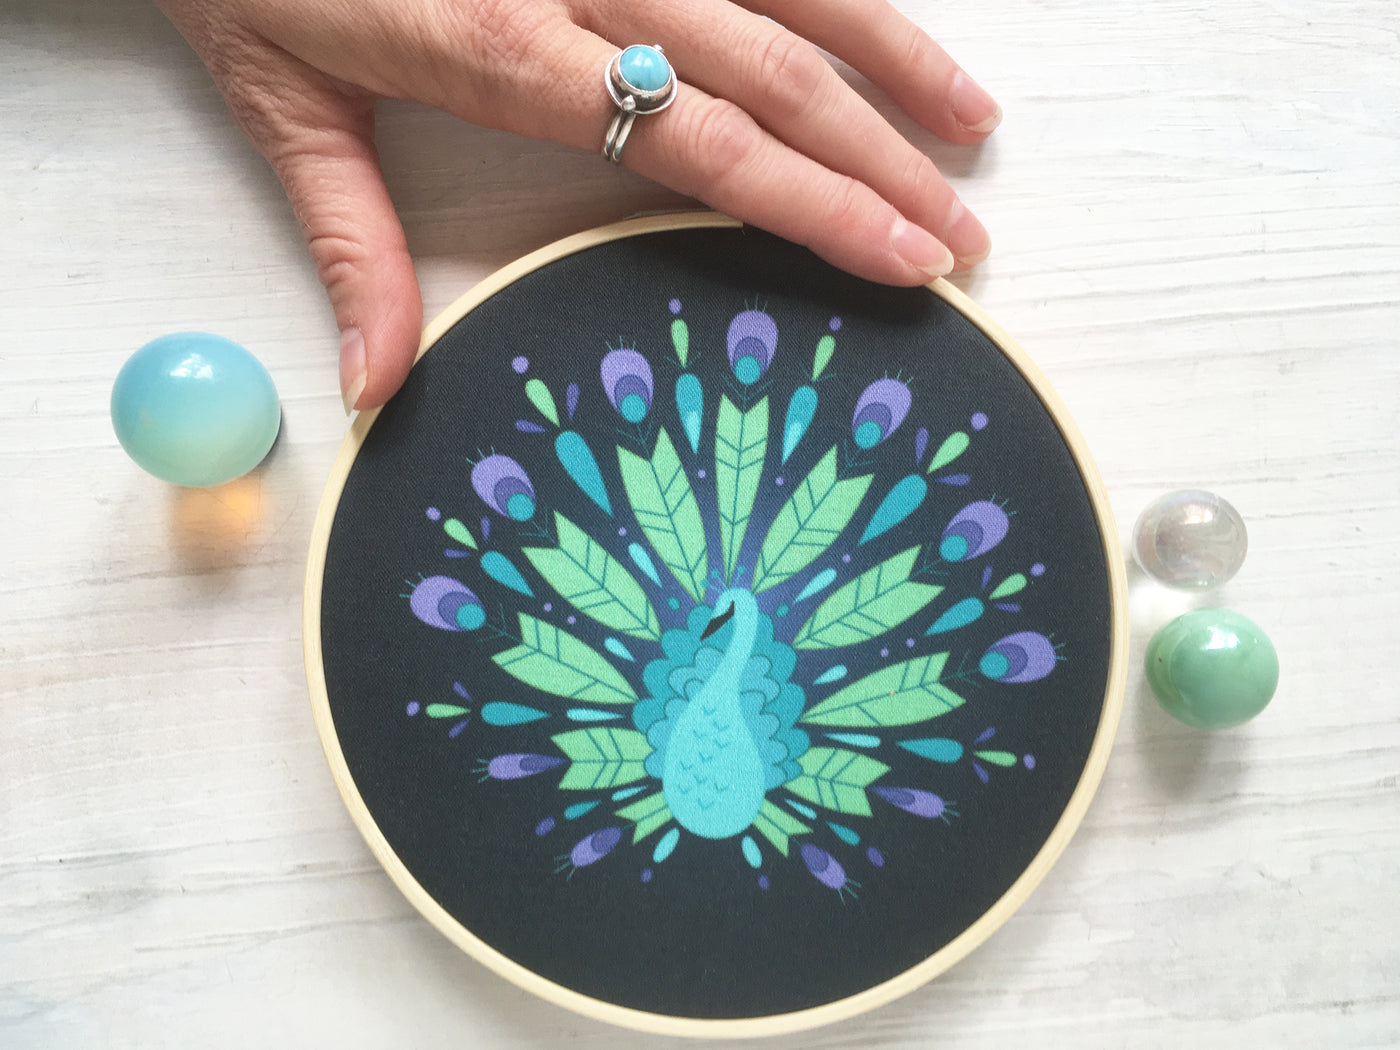 Peacock Mandala Hand Embroidery Sampler